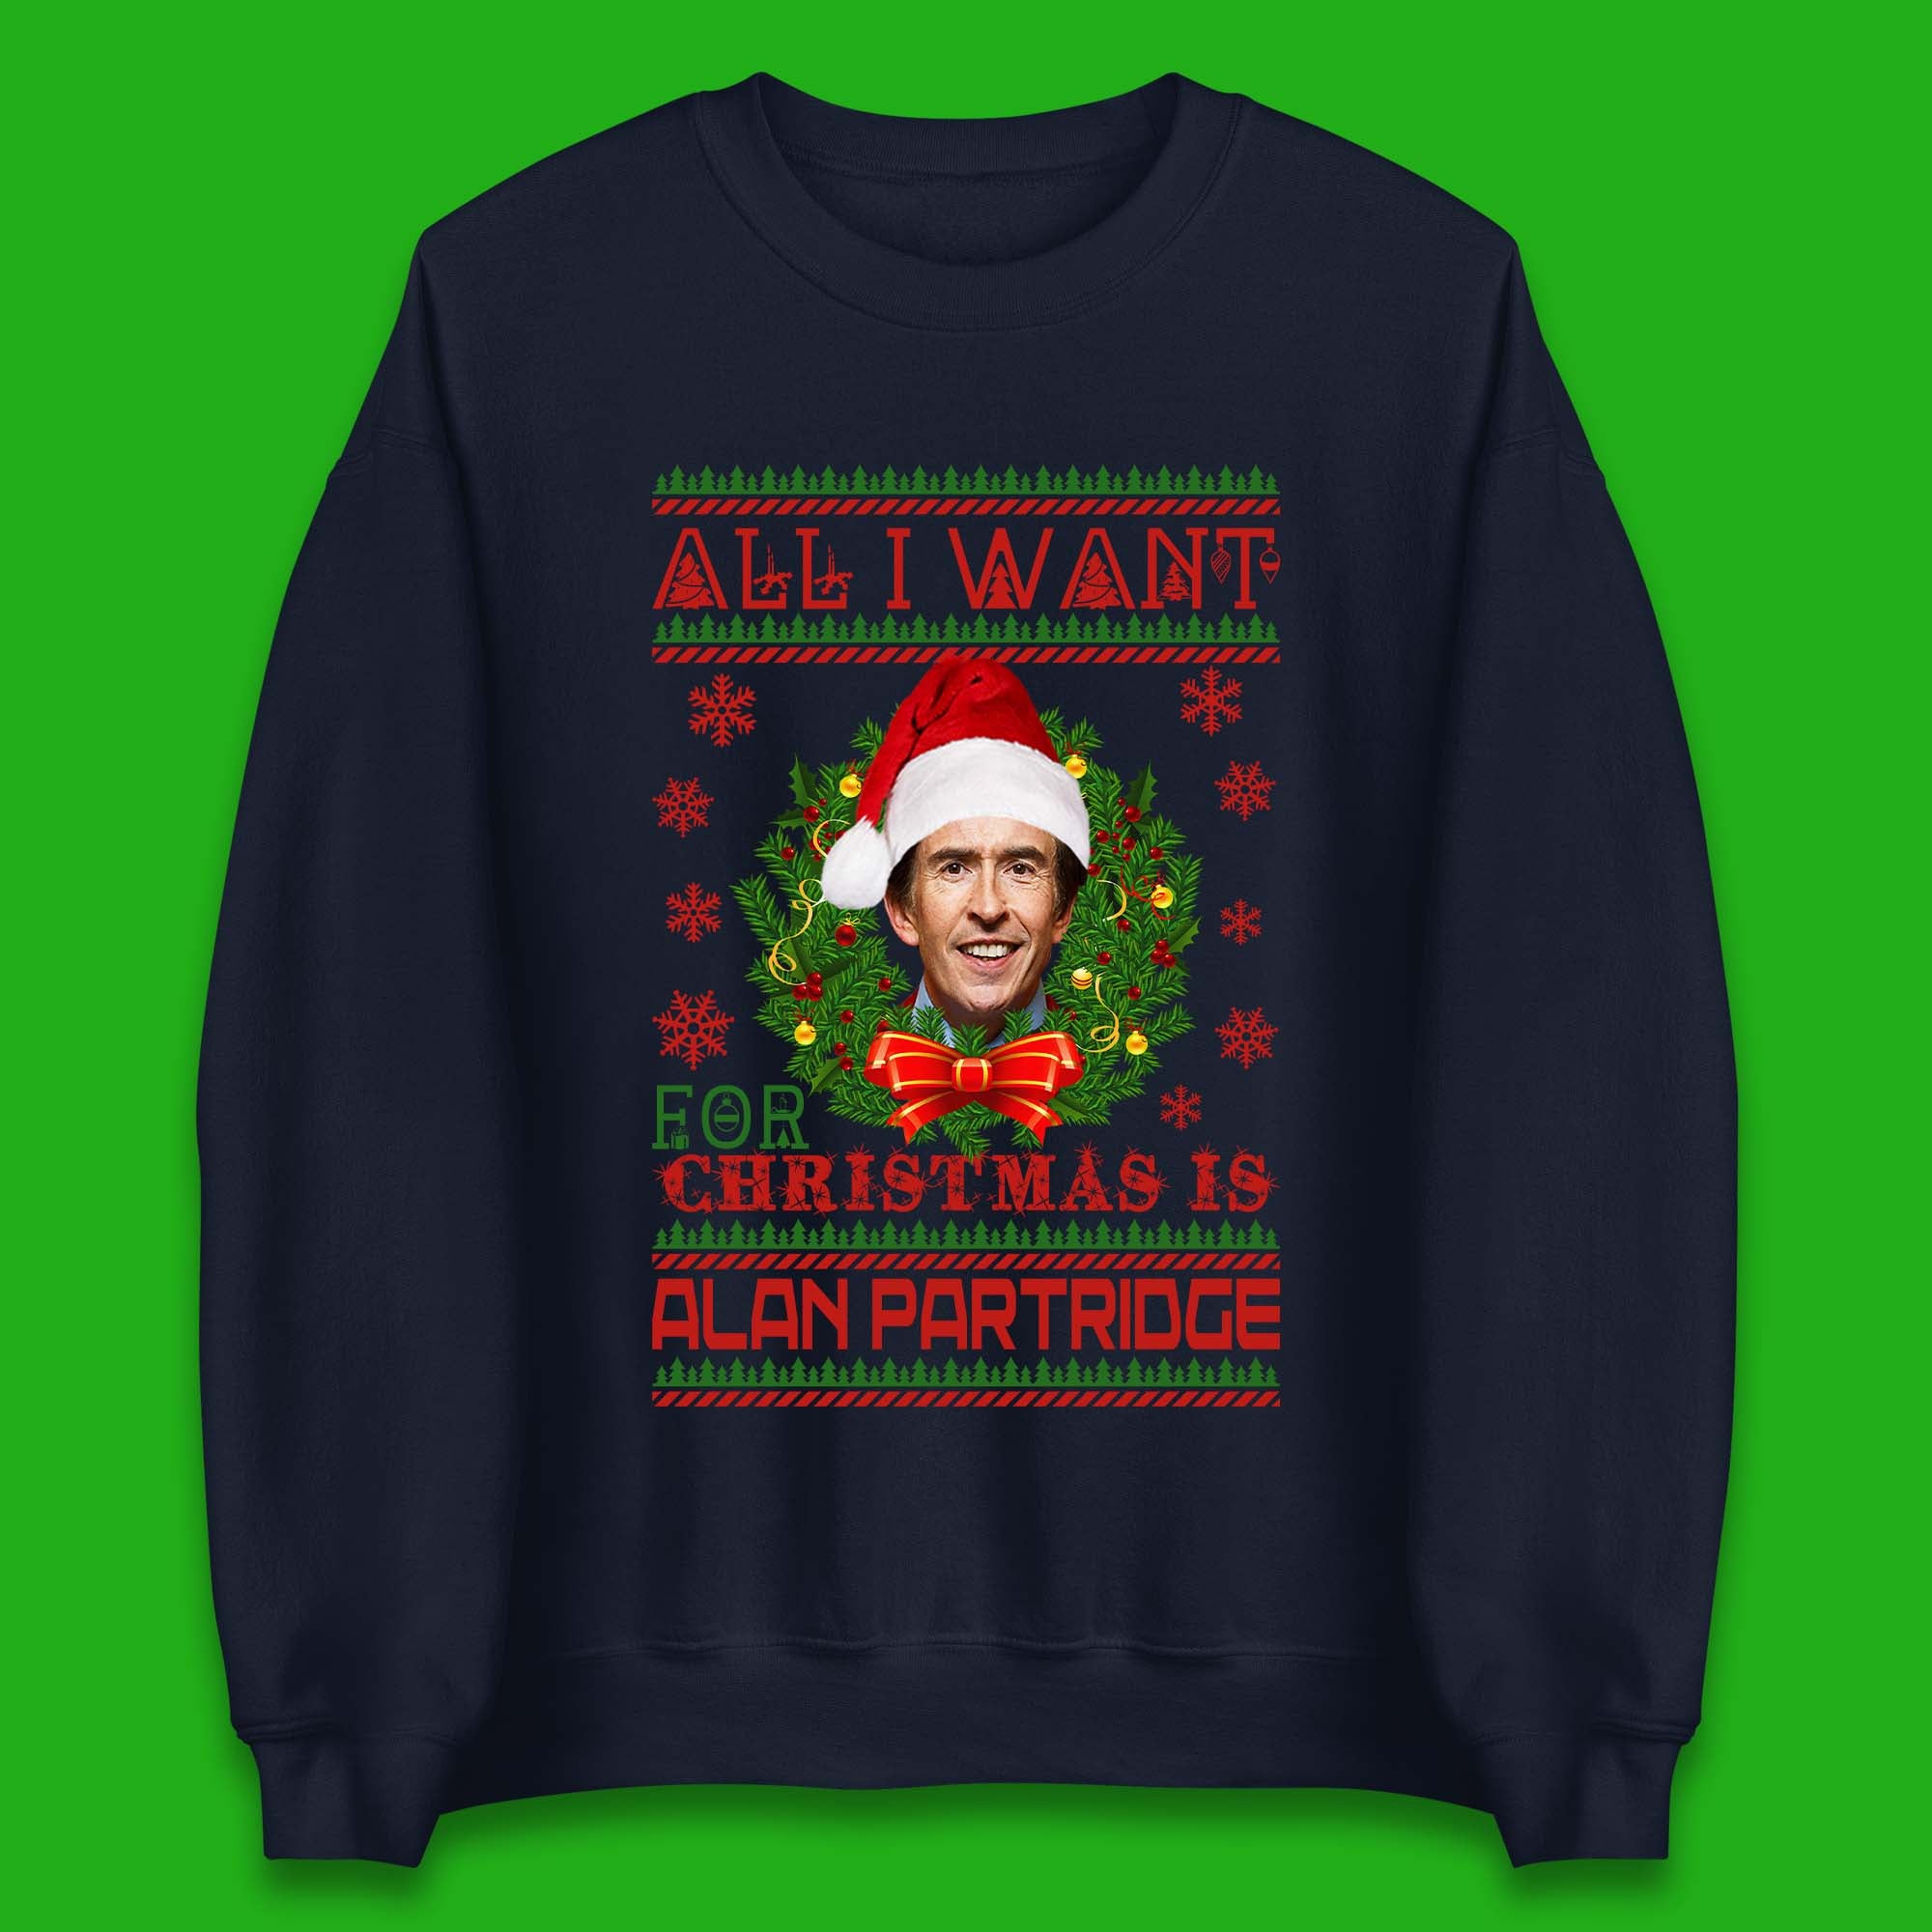 Want Alan Partridge For Christmas Unisex Sweatshirt